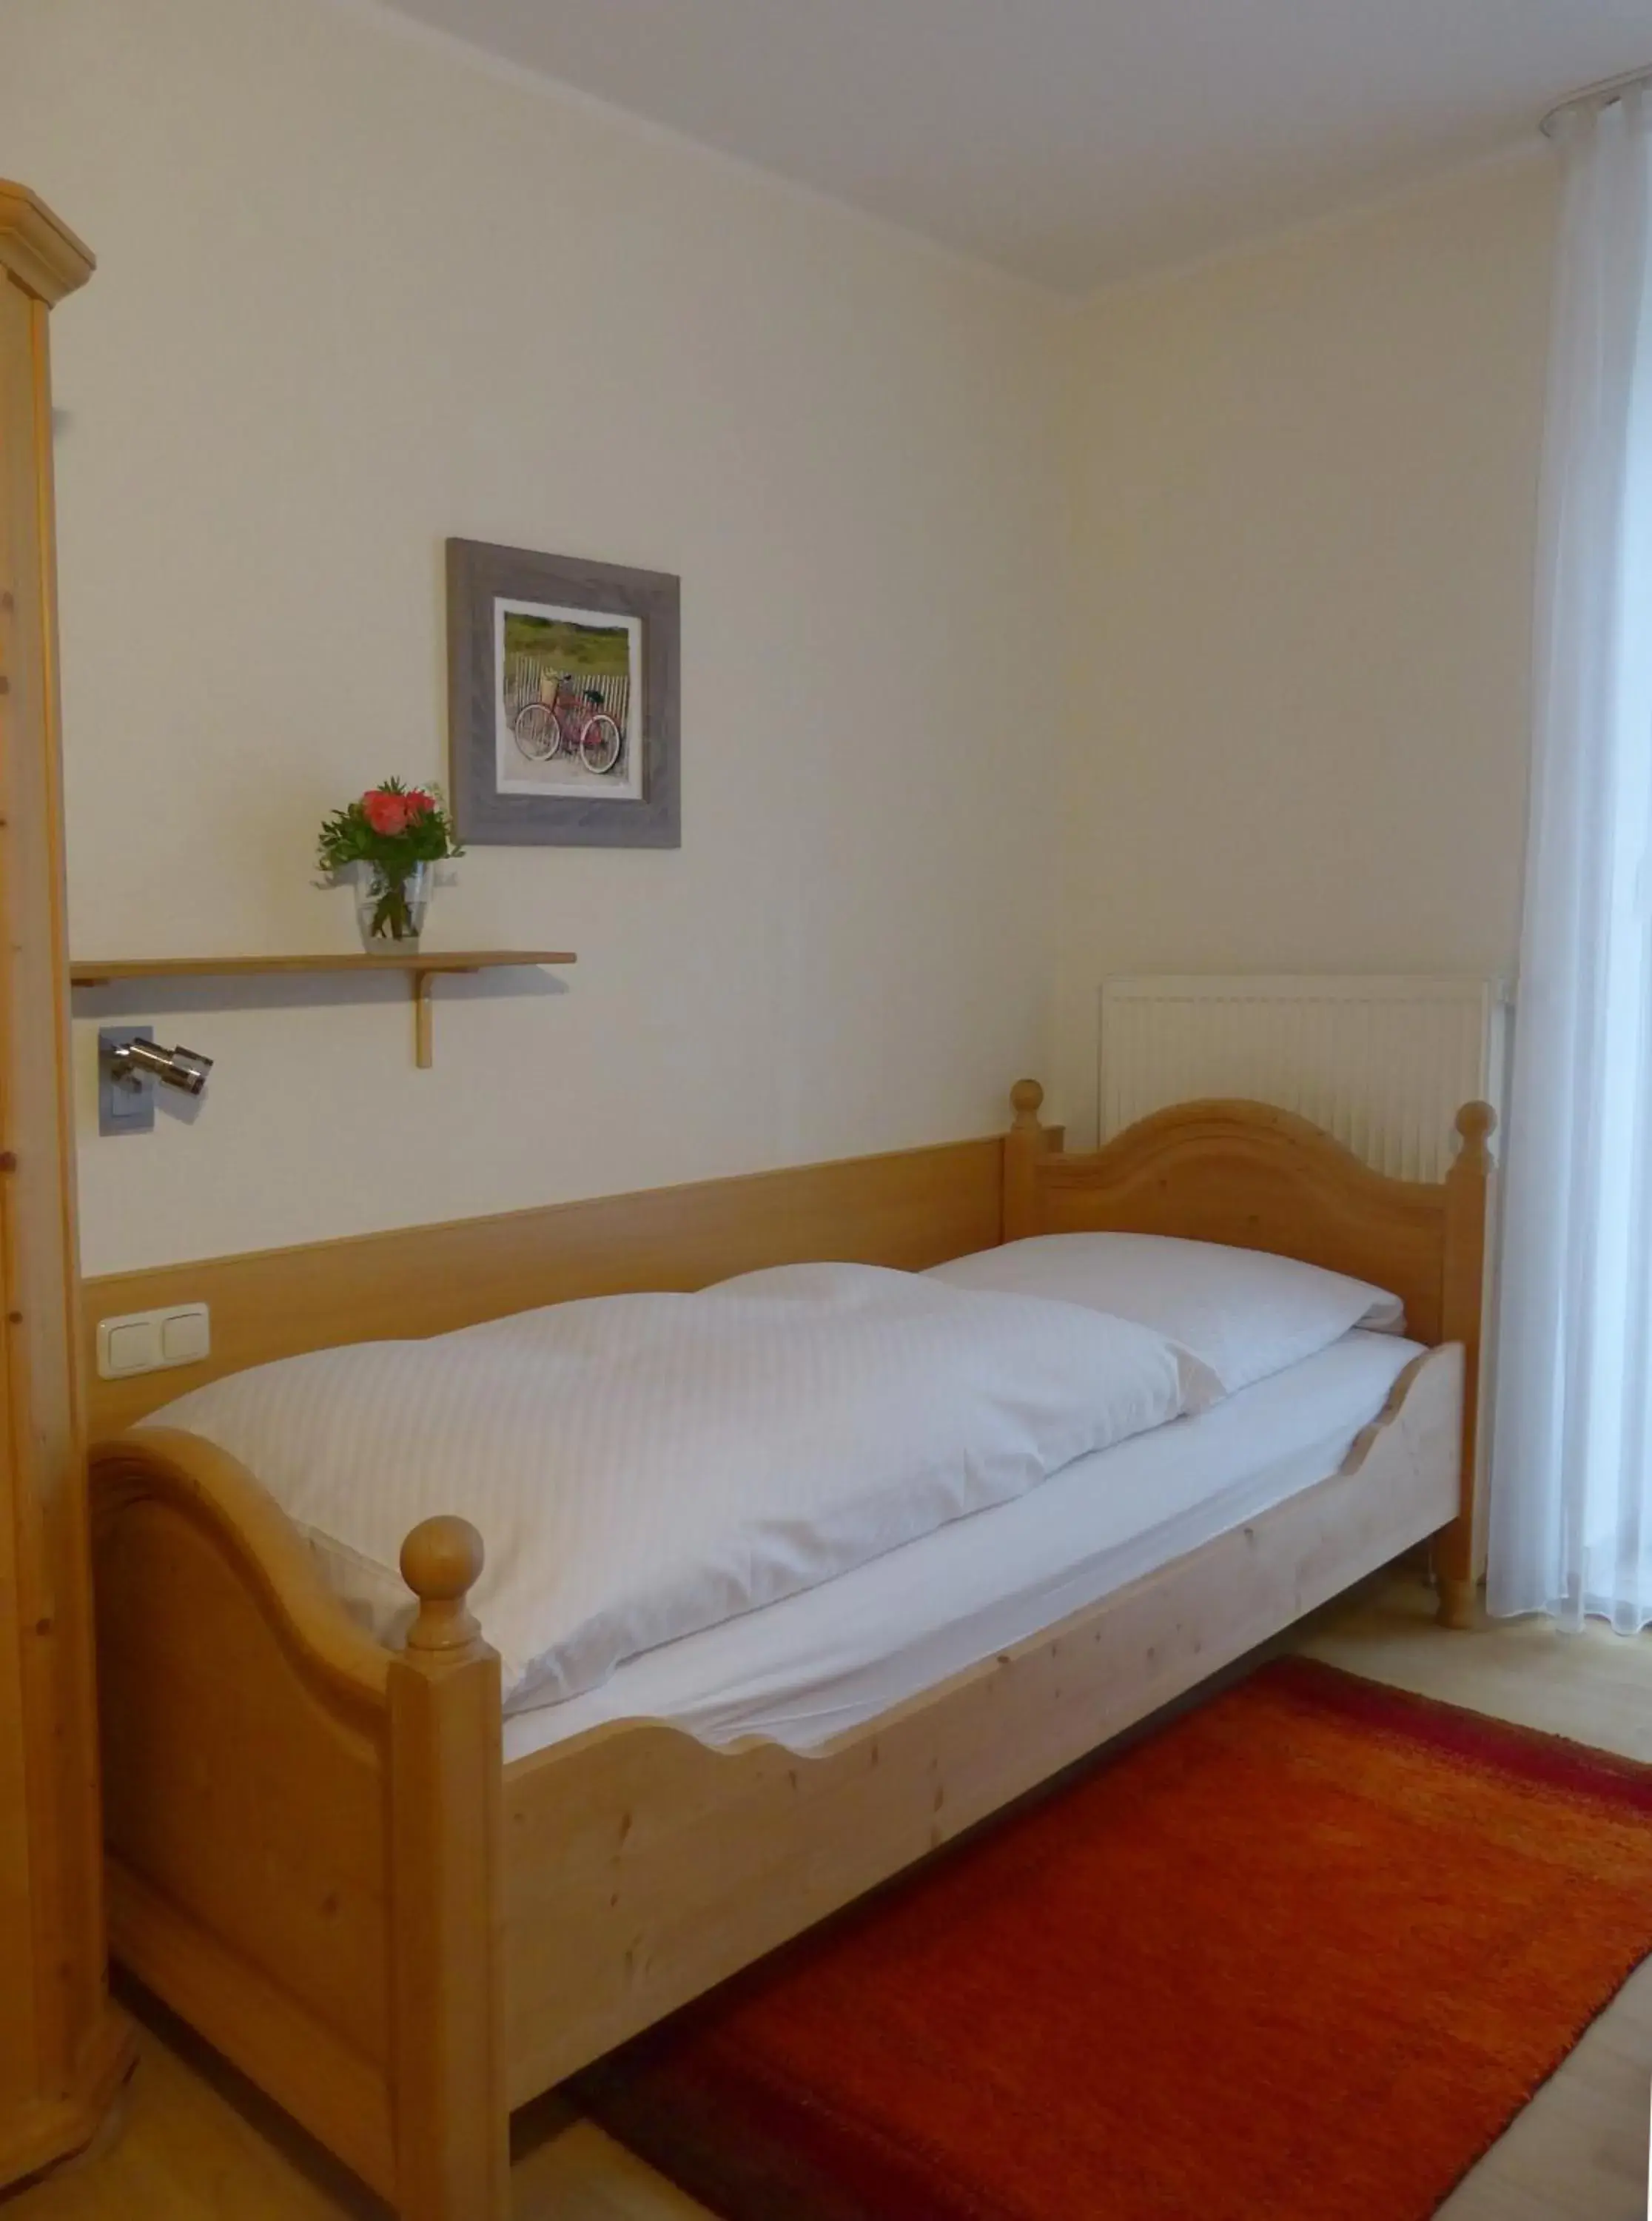 Bedroom, Room Photo in Landhaus Bolzum